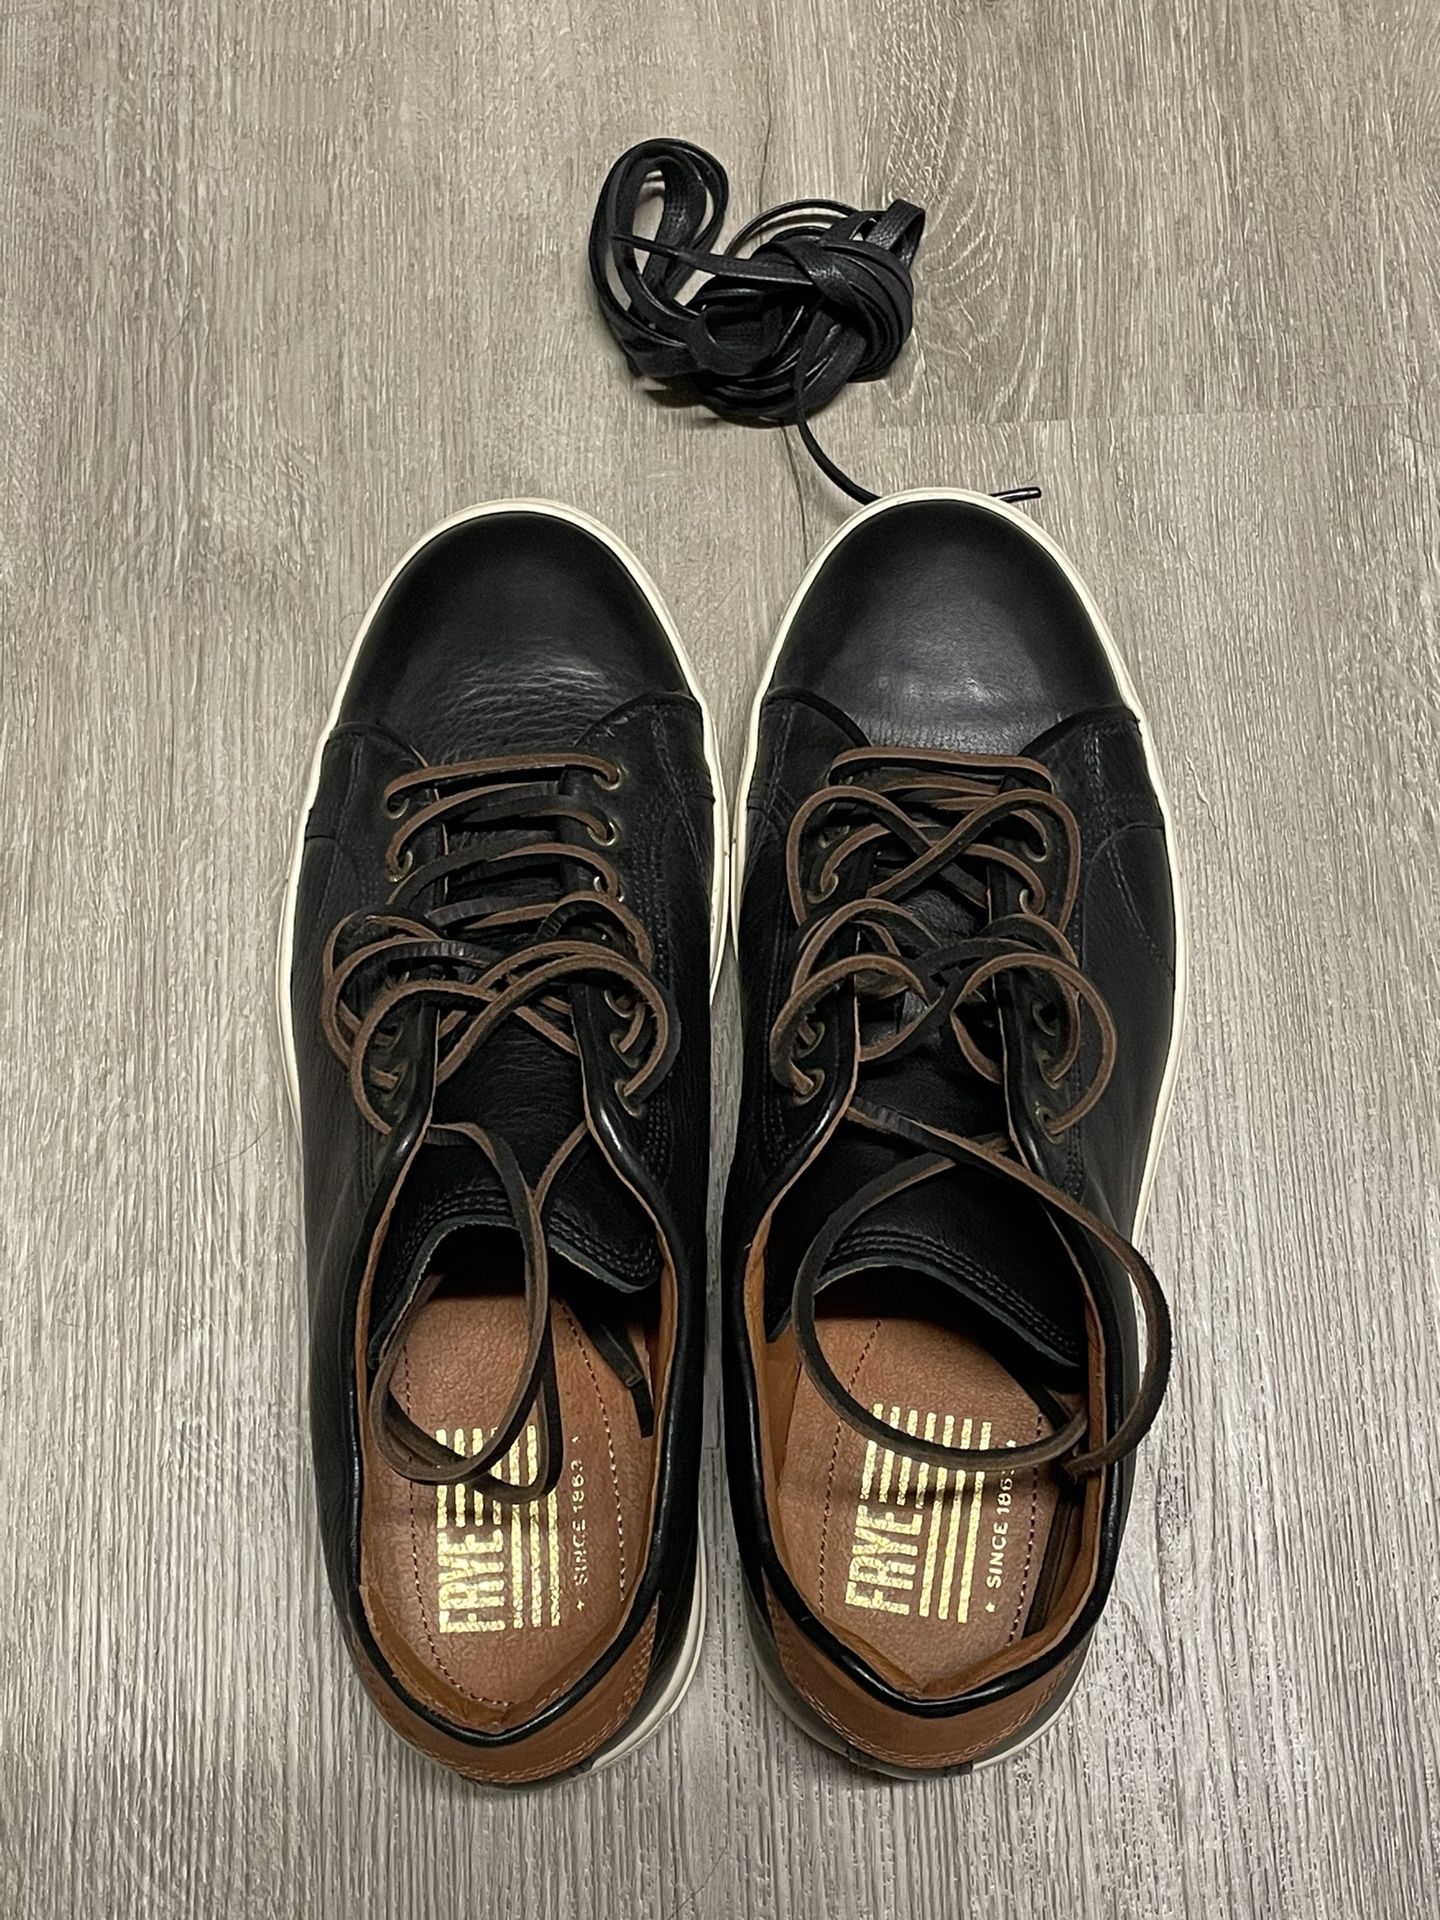 Frye Men’s Shoe - US Men’s 12 - Leather